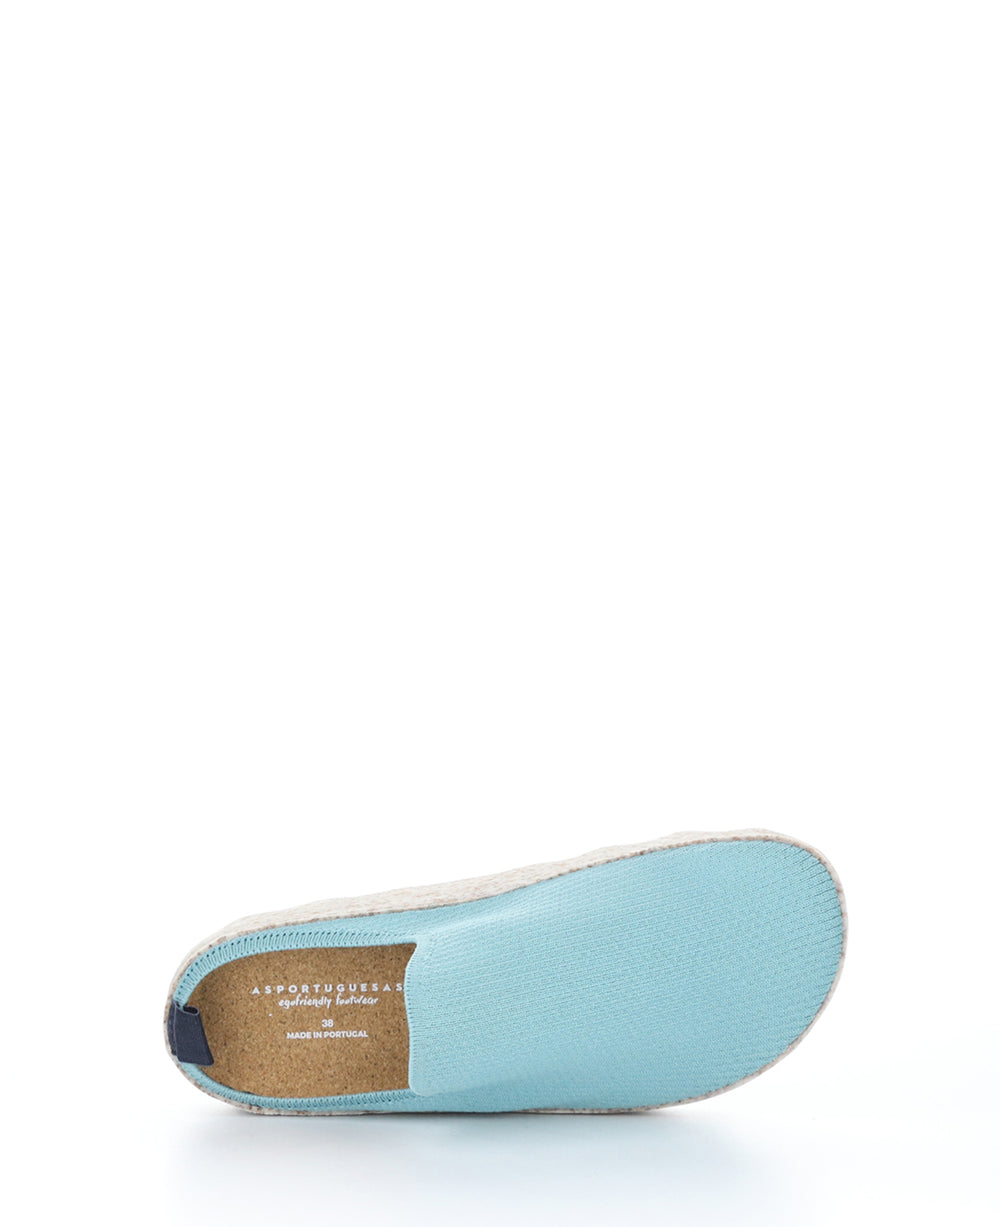 CLOG102ASP AQUA/MILKY Slip-on Shoes|CLOG102ASP Chaussures à Bout Rond in Bleu